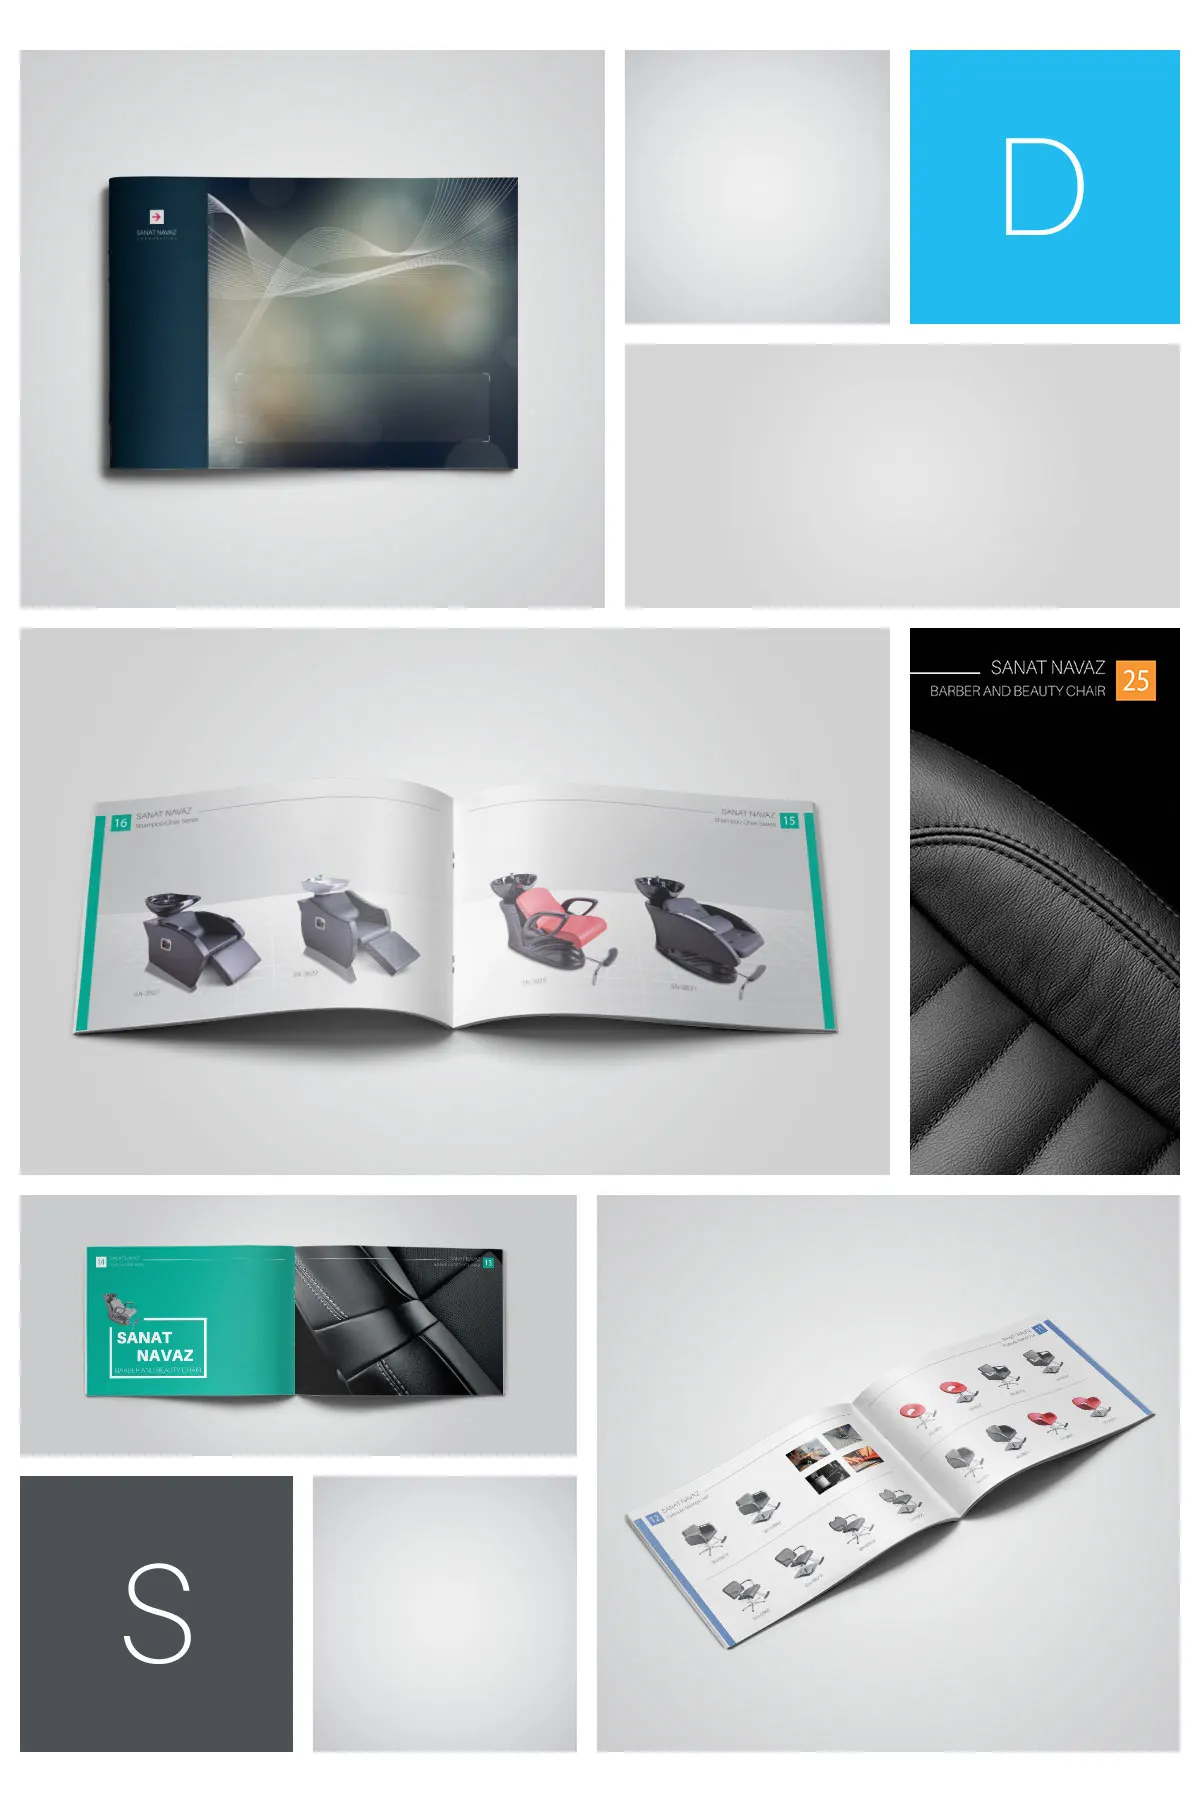 Sanat Navaz catalog design | Hossein Donyadideh